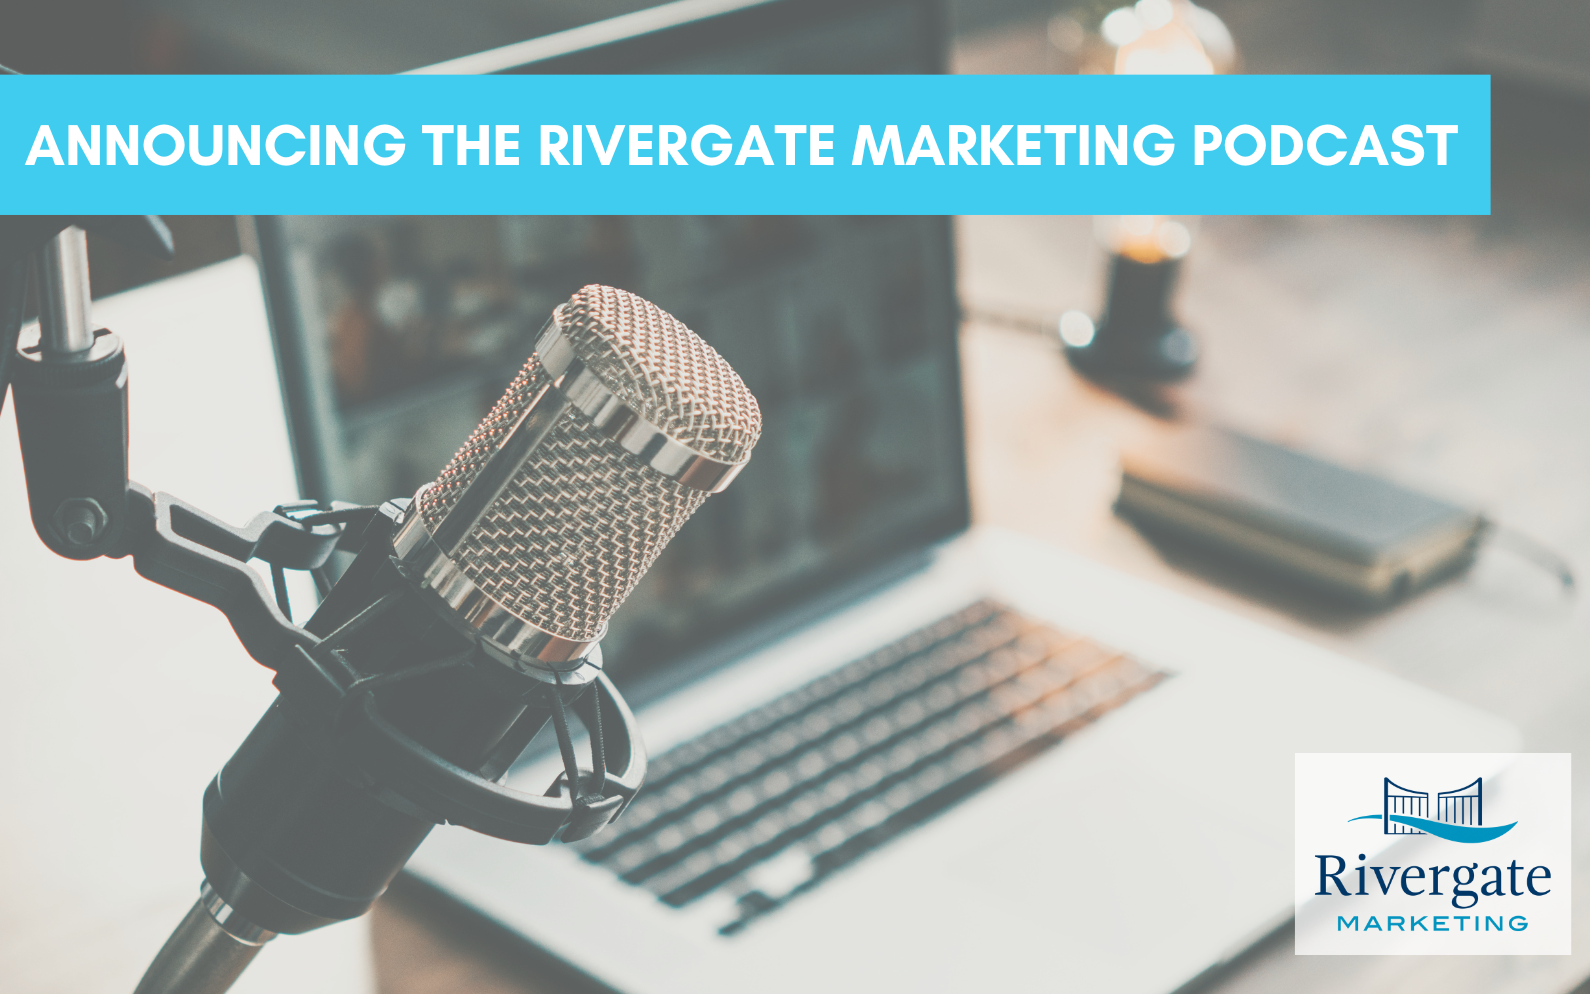 Rivergate Marketing Launches Podcast